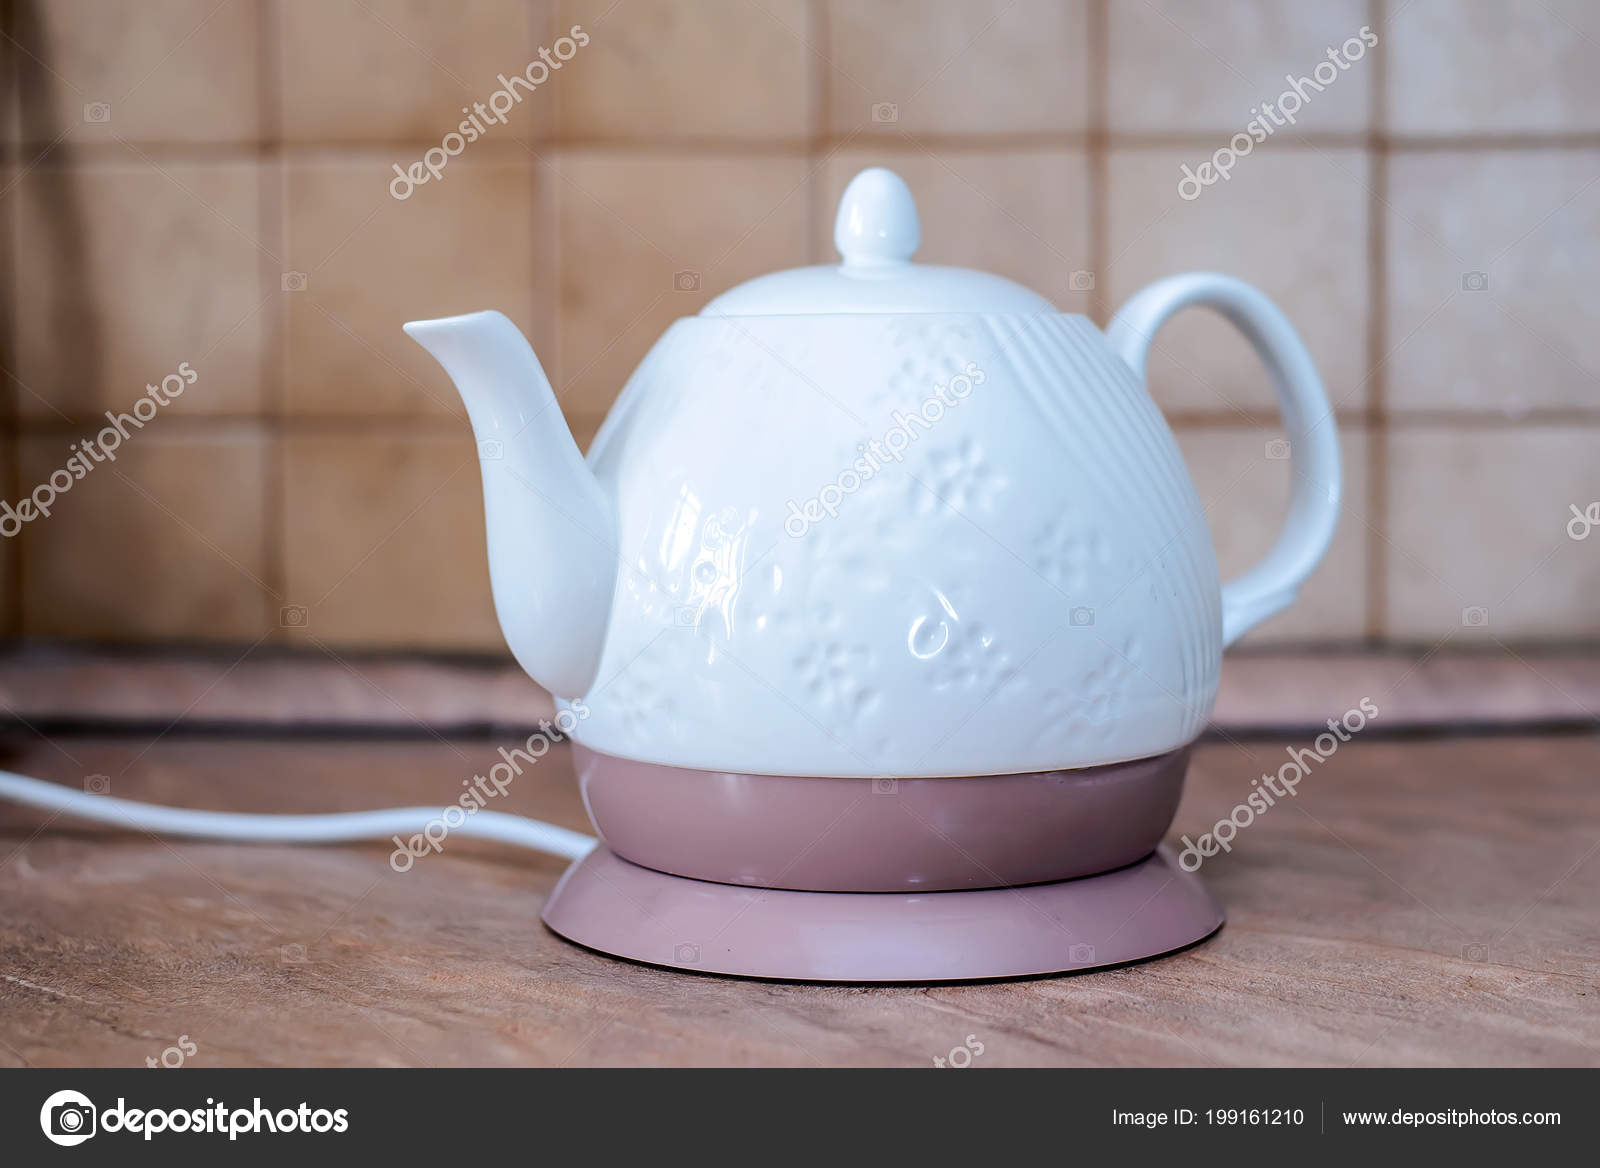 https://st4.depositphotos.com/8359370/19916/i/1600/depositphotos_199161210-stock-photo-white-ceramic-electric-kettle-stand.jpg